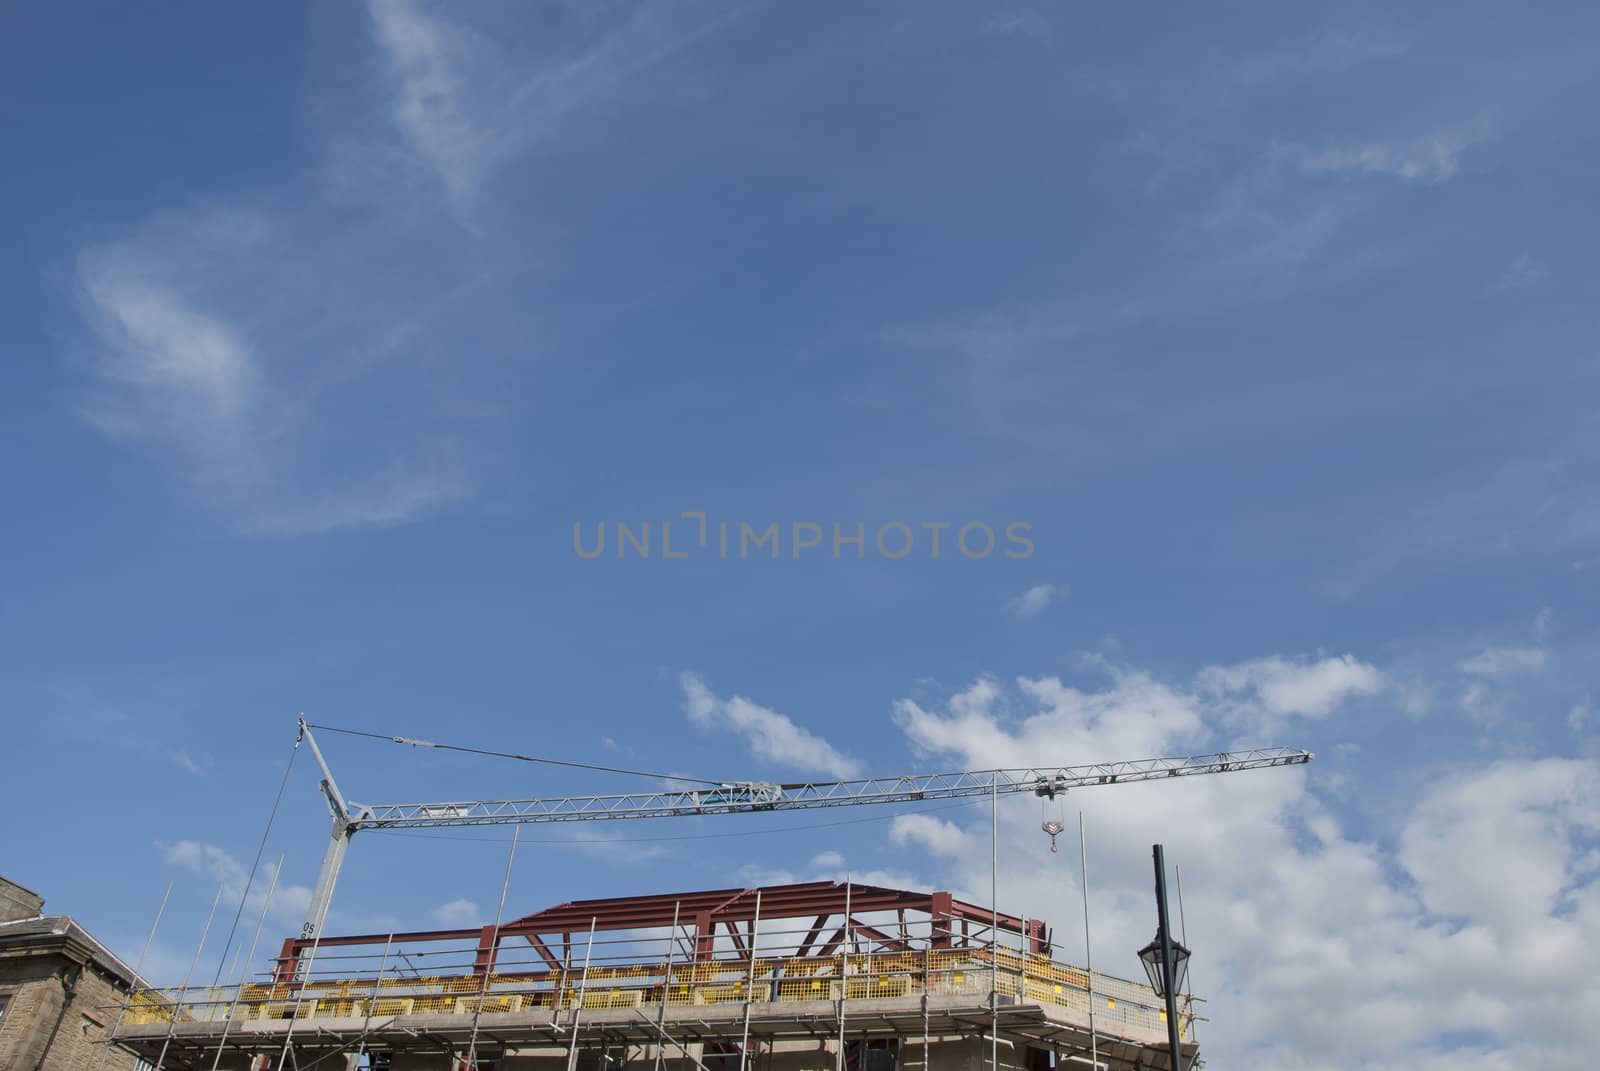 A Grey Construction Crane on a building site